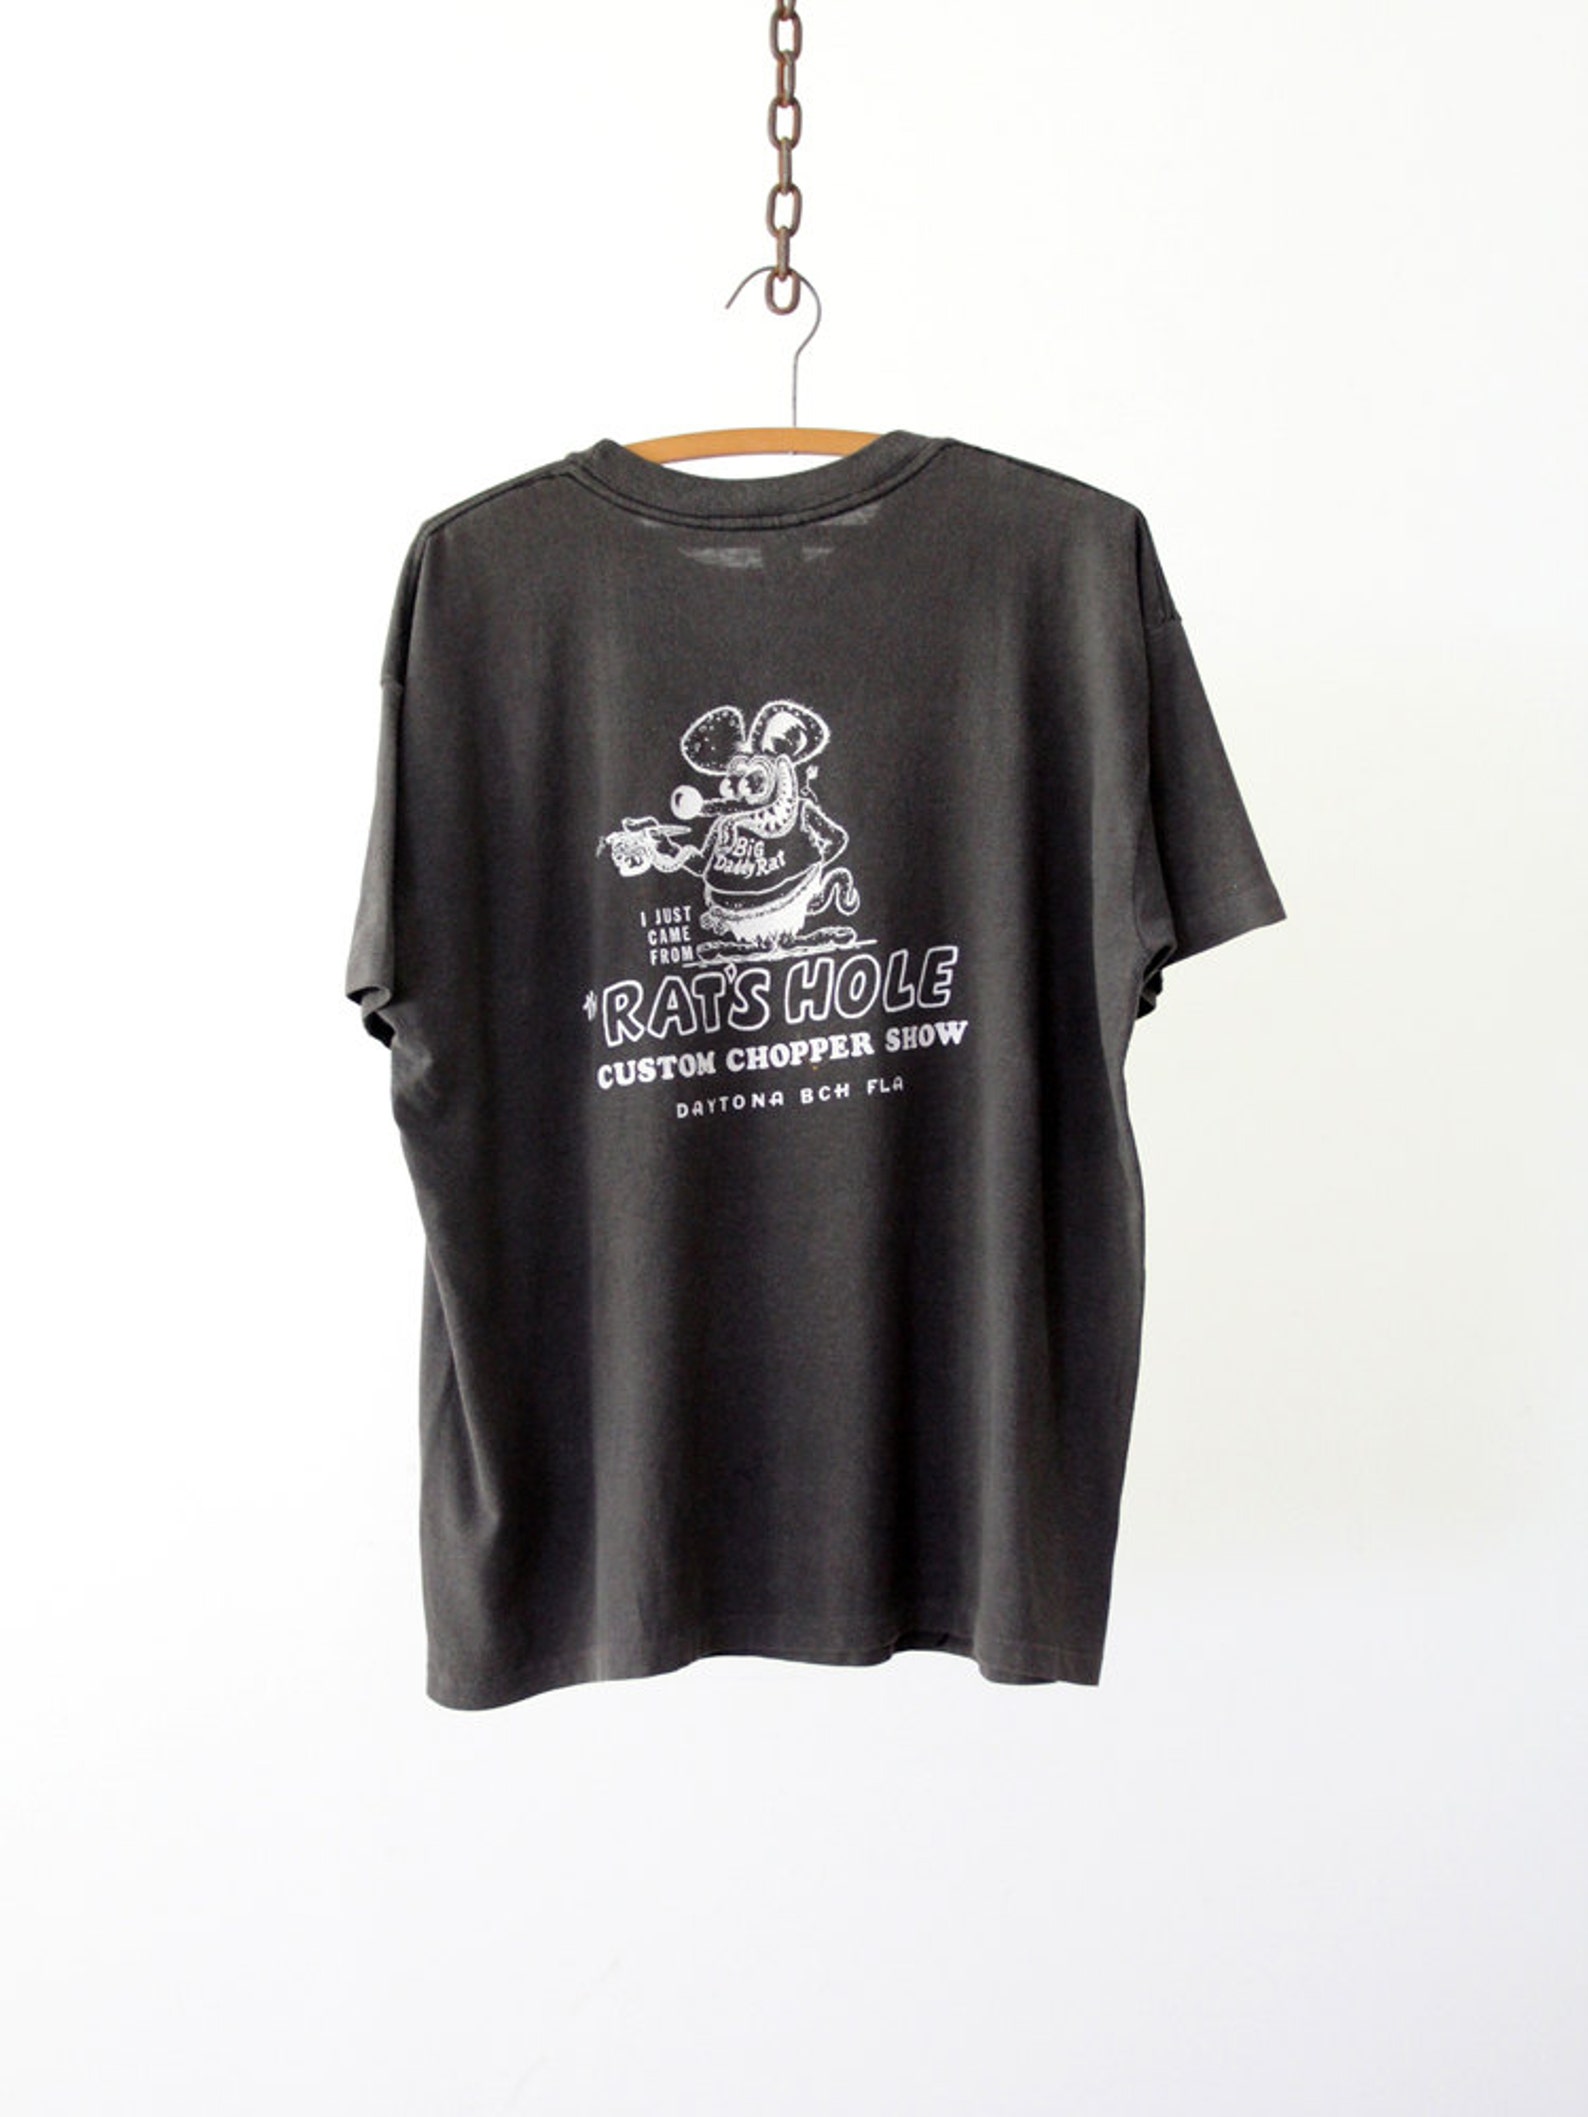 Rat's Hole T-shirt Vintage Bike Week Tee Large Black - Etsy